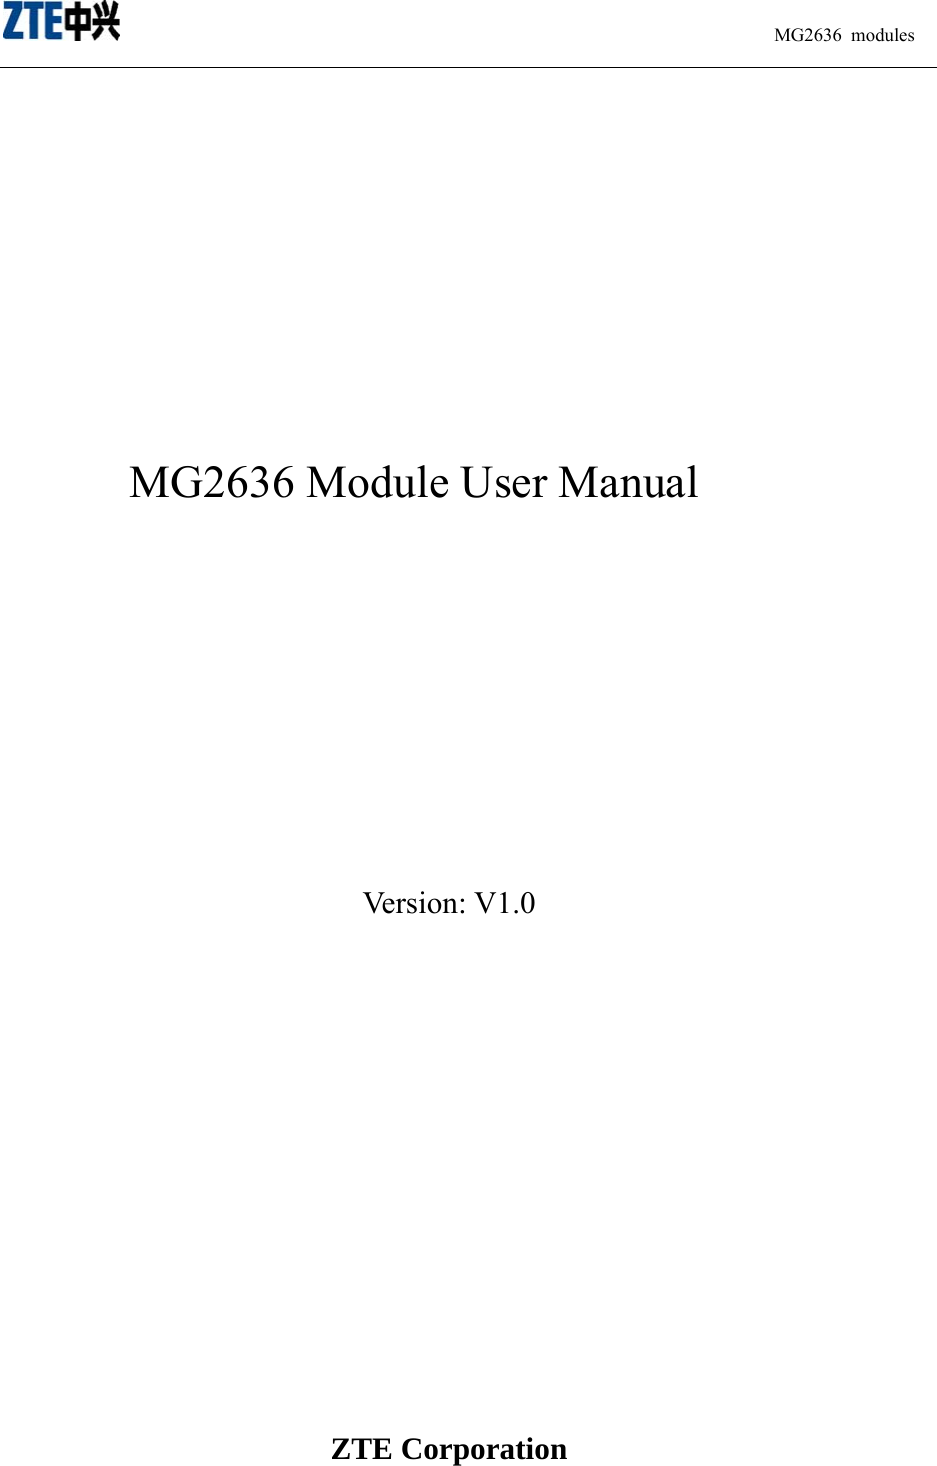                                                                     MG2636 modules      MG2636 Module User Manual      Version: V1.0          ZTE Corporation  